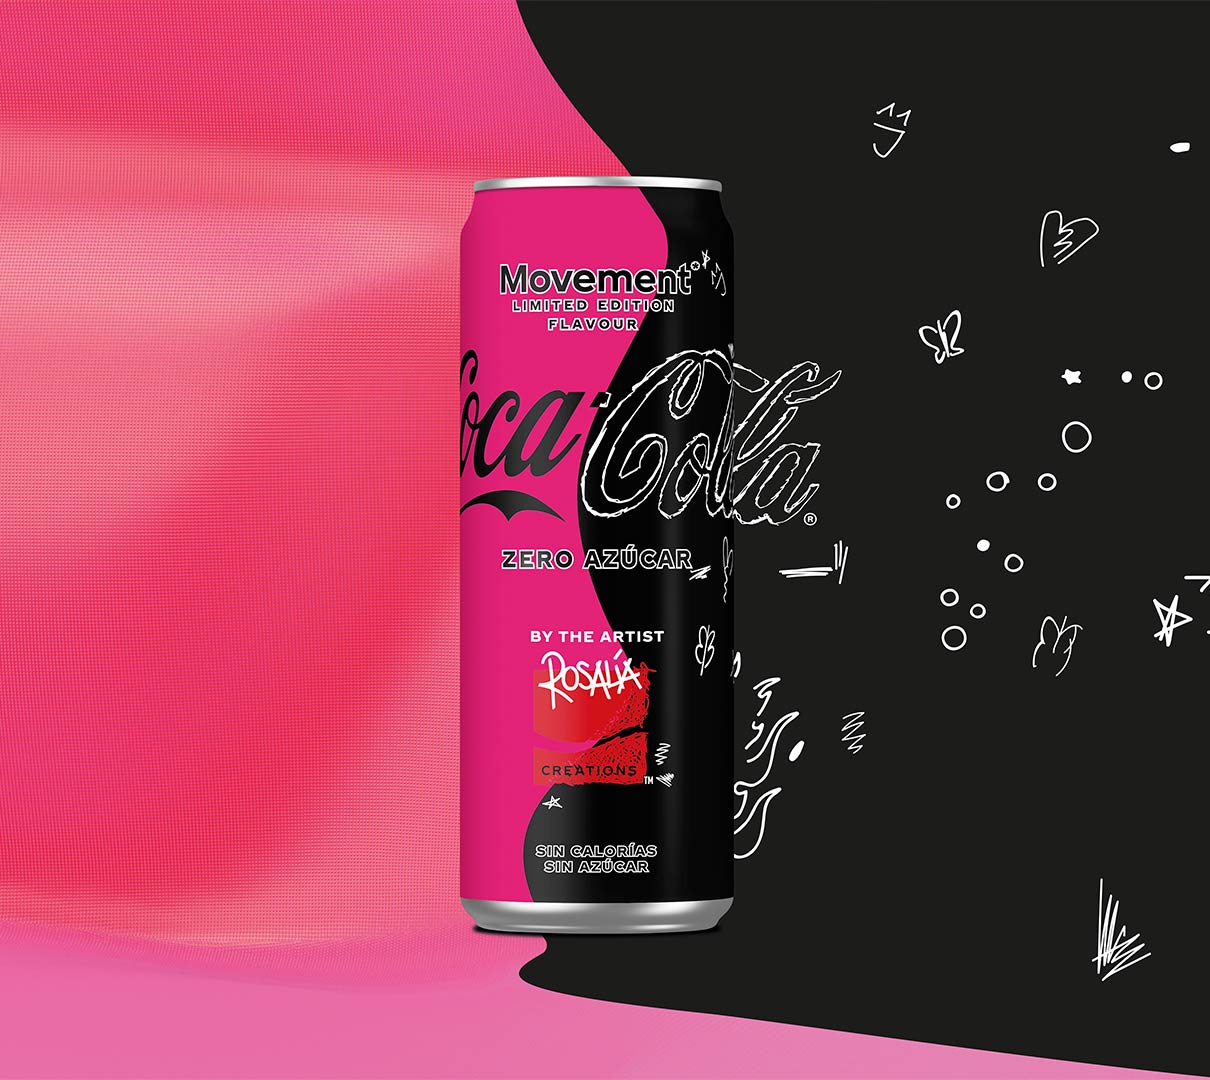 Coca-Cola lanza la marca Zero sin cafeina - Marketing Directo